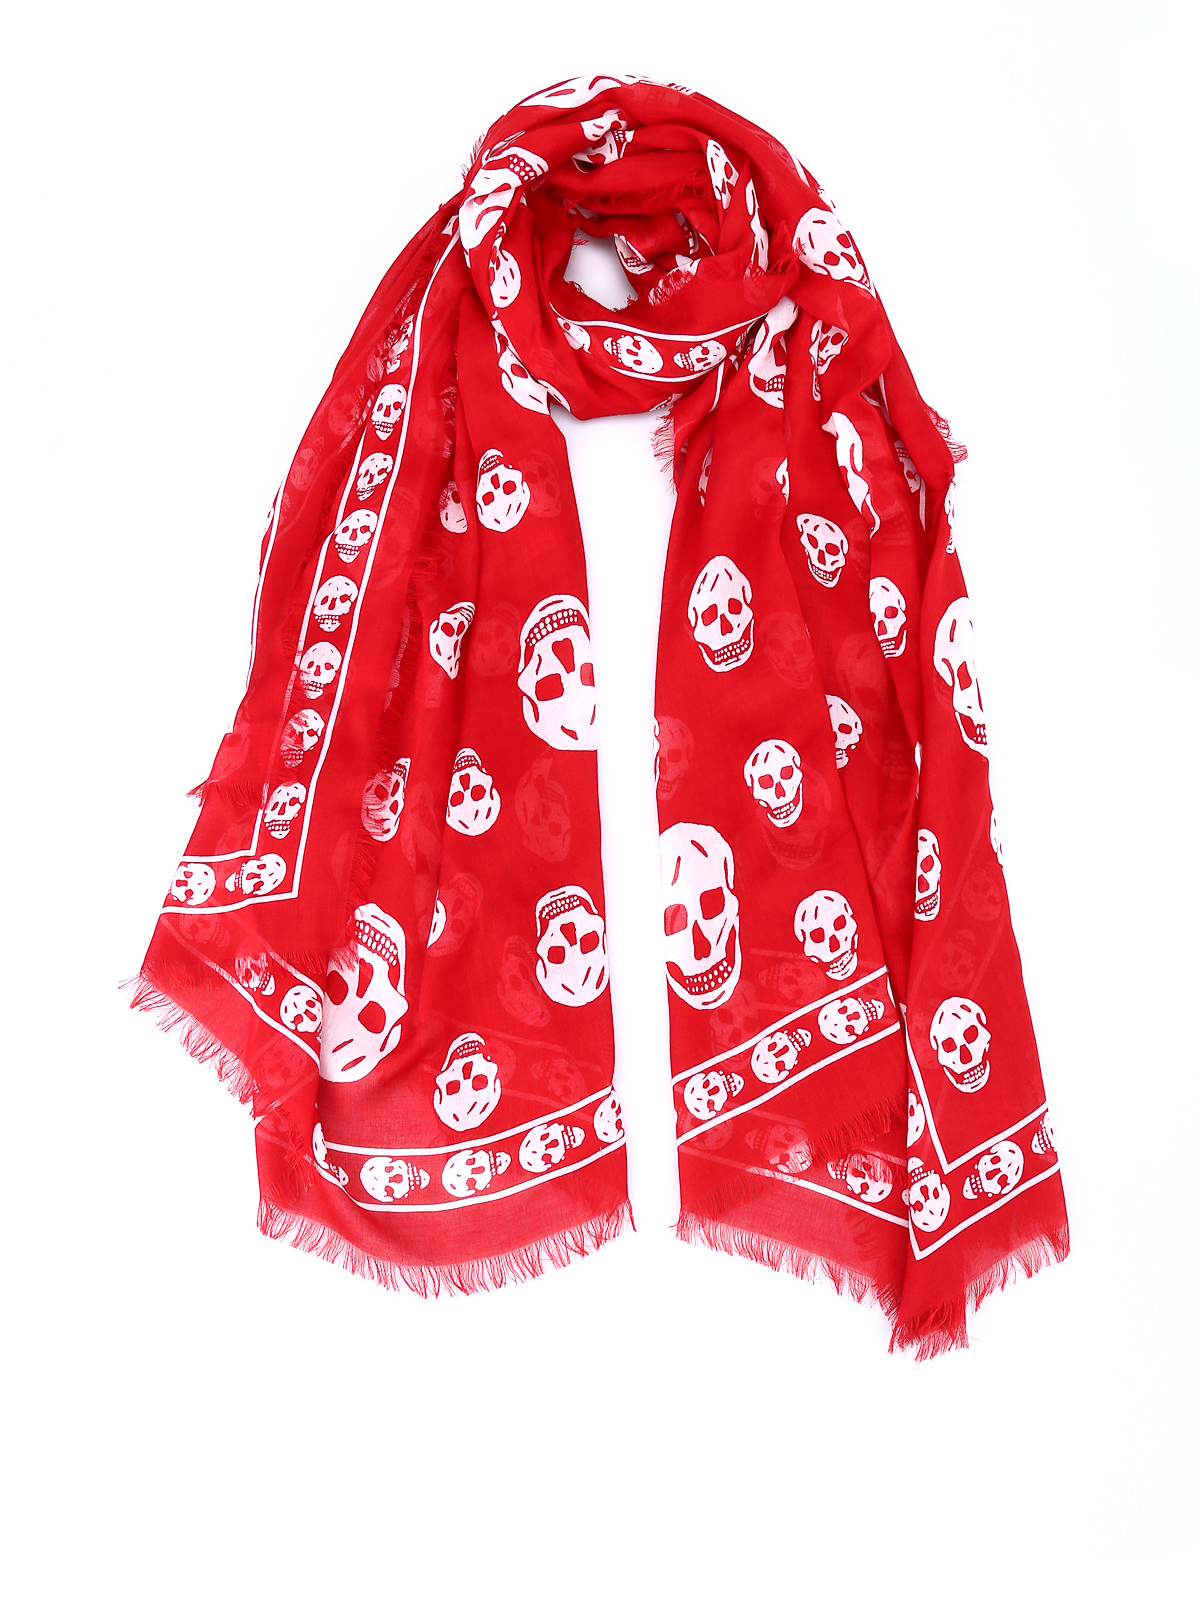 red alexander mcqueen scarf